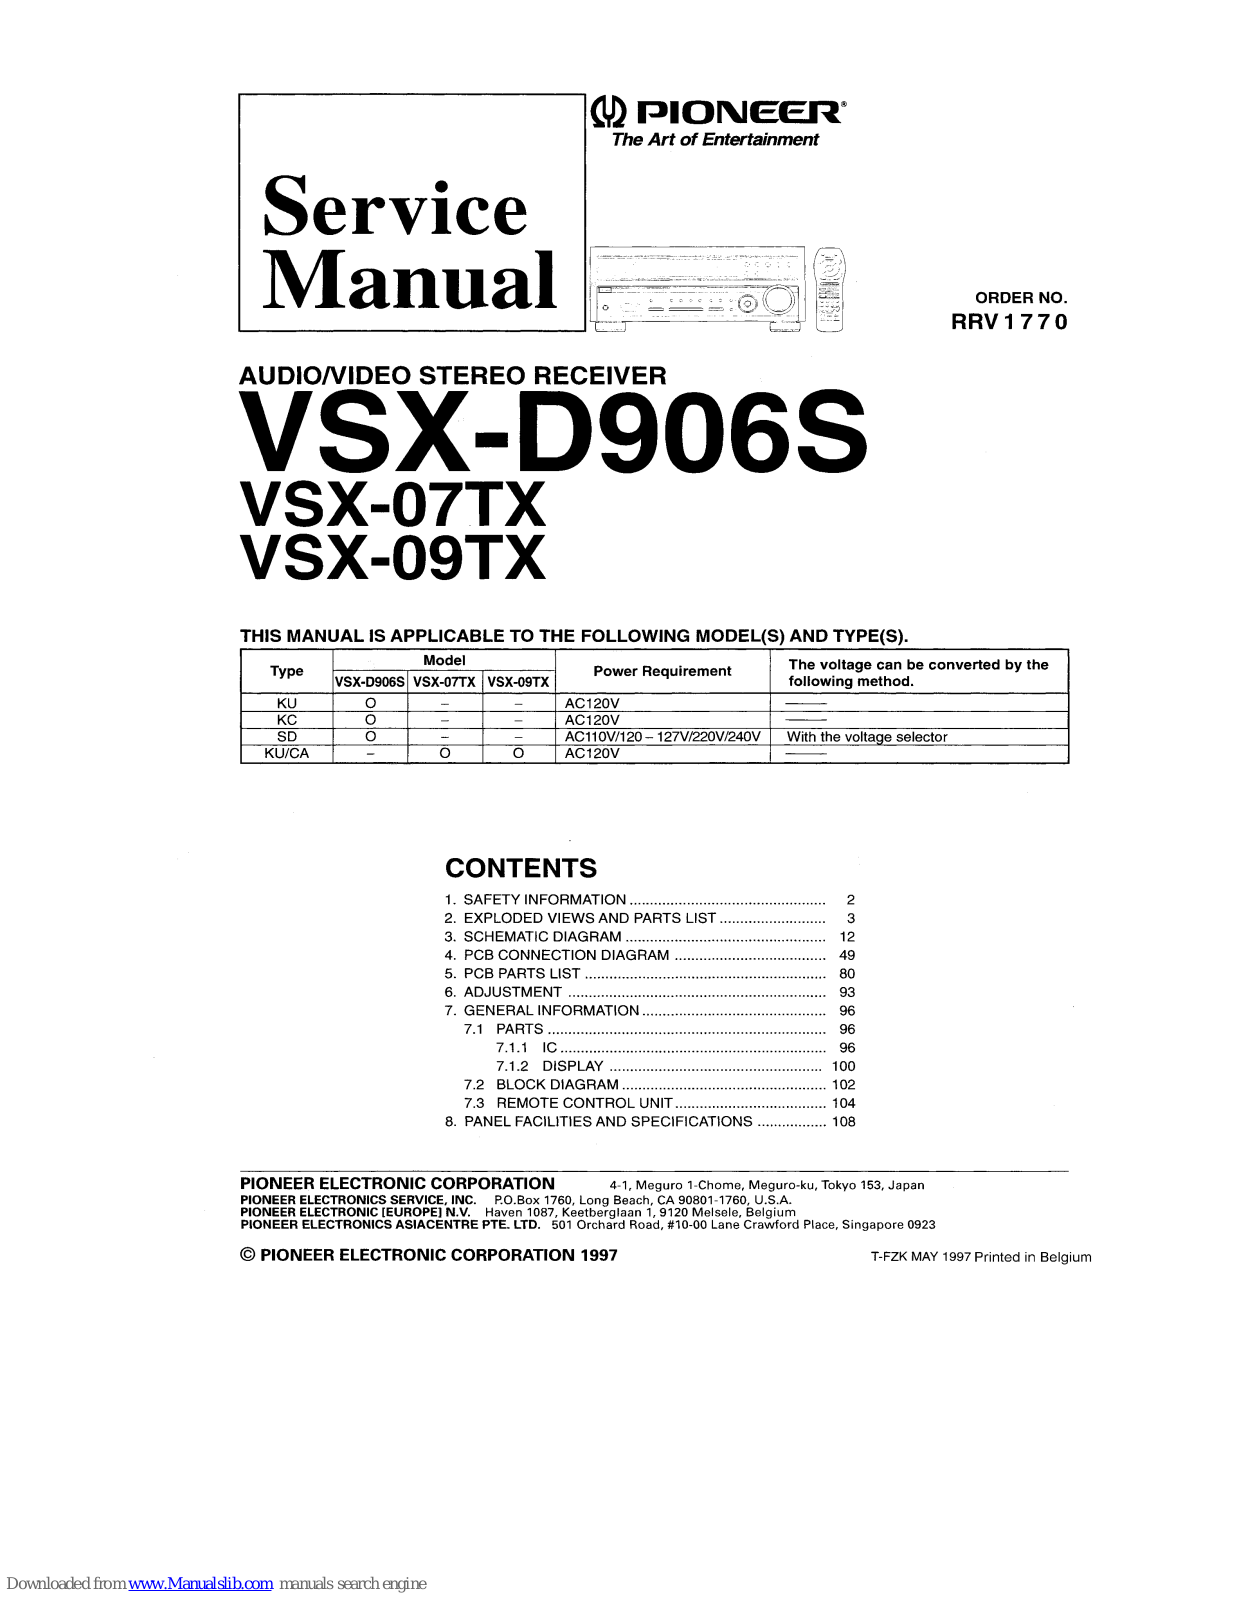 Pioneer VSX-07TX, VSX-D906S, VSX-09TX Service Manual